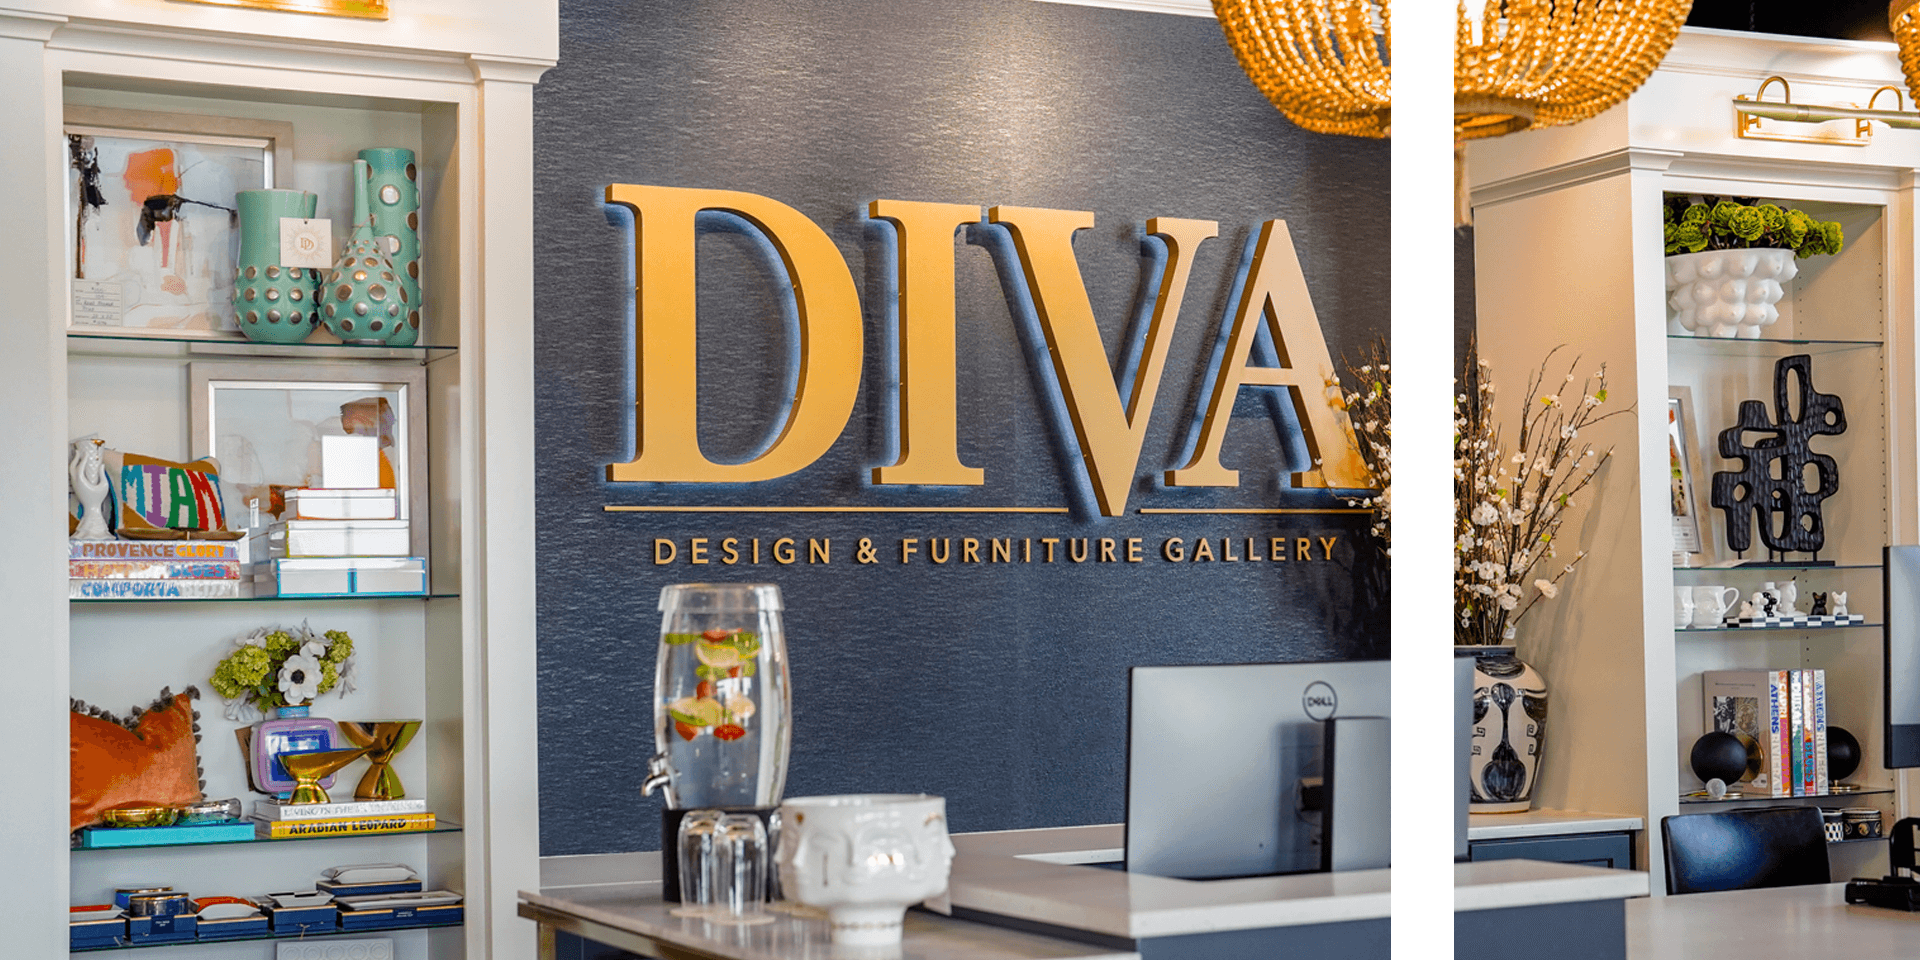 Diva Design & Furniture Gallery building